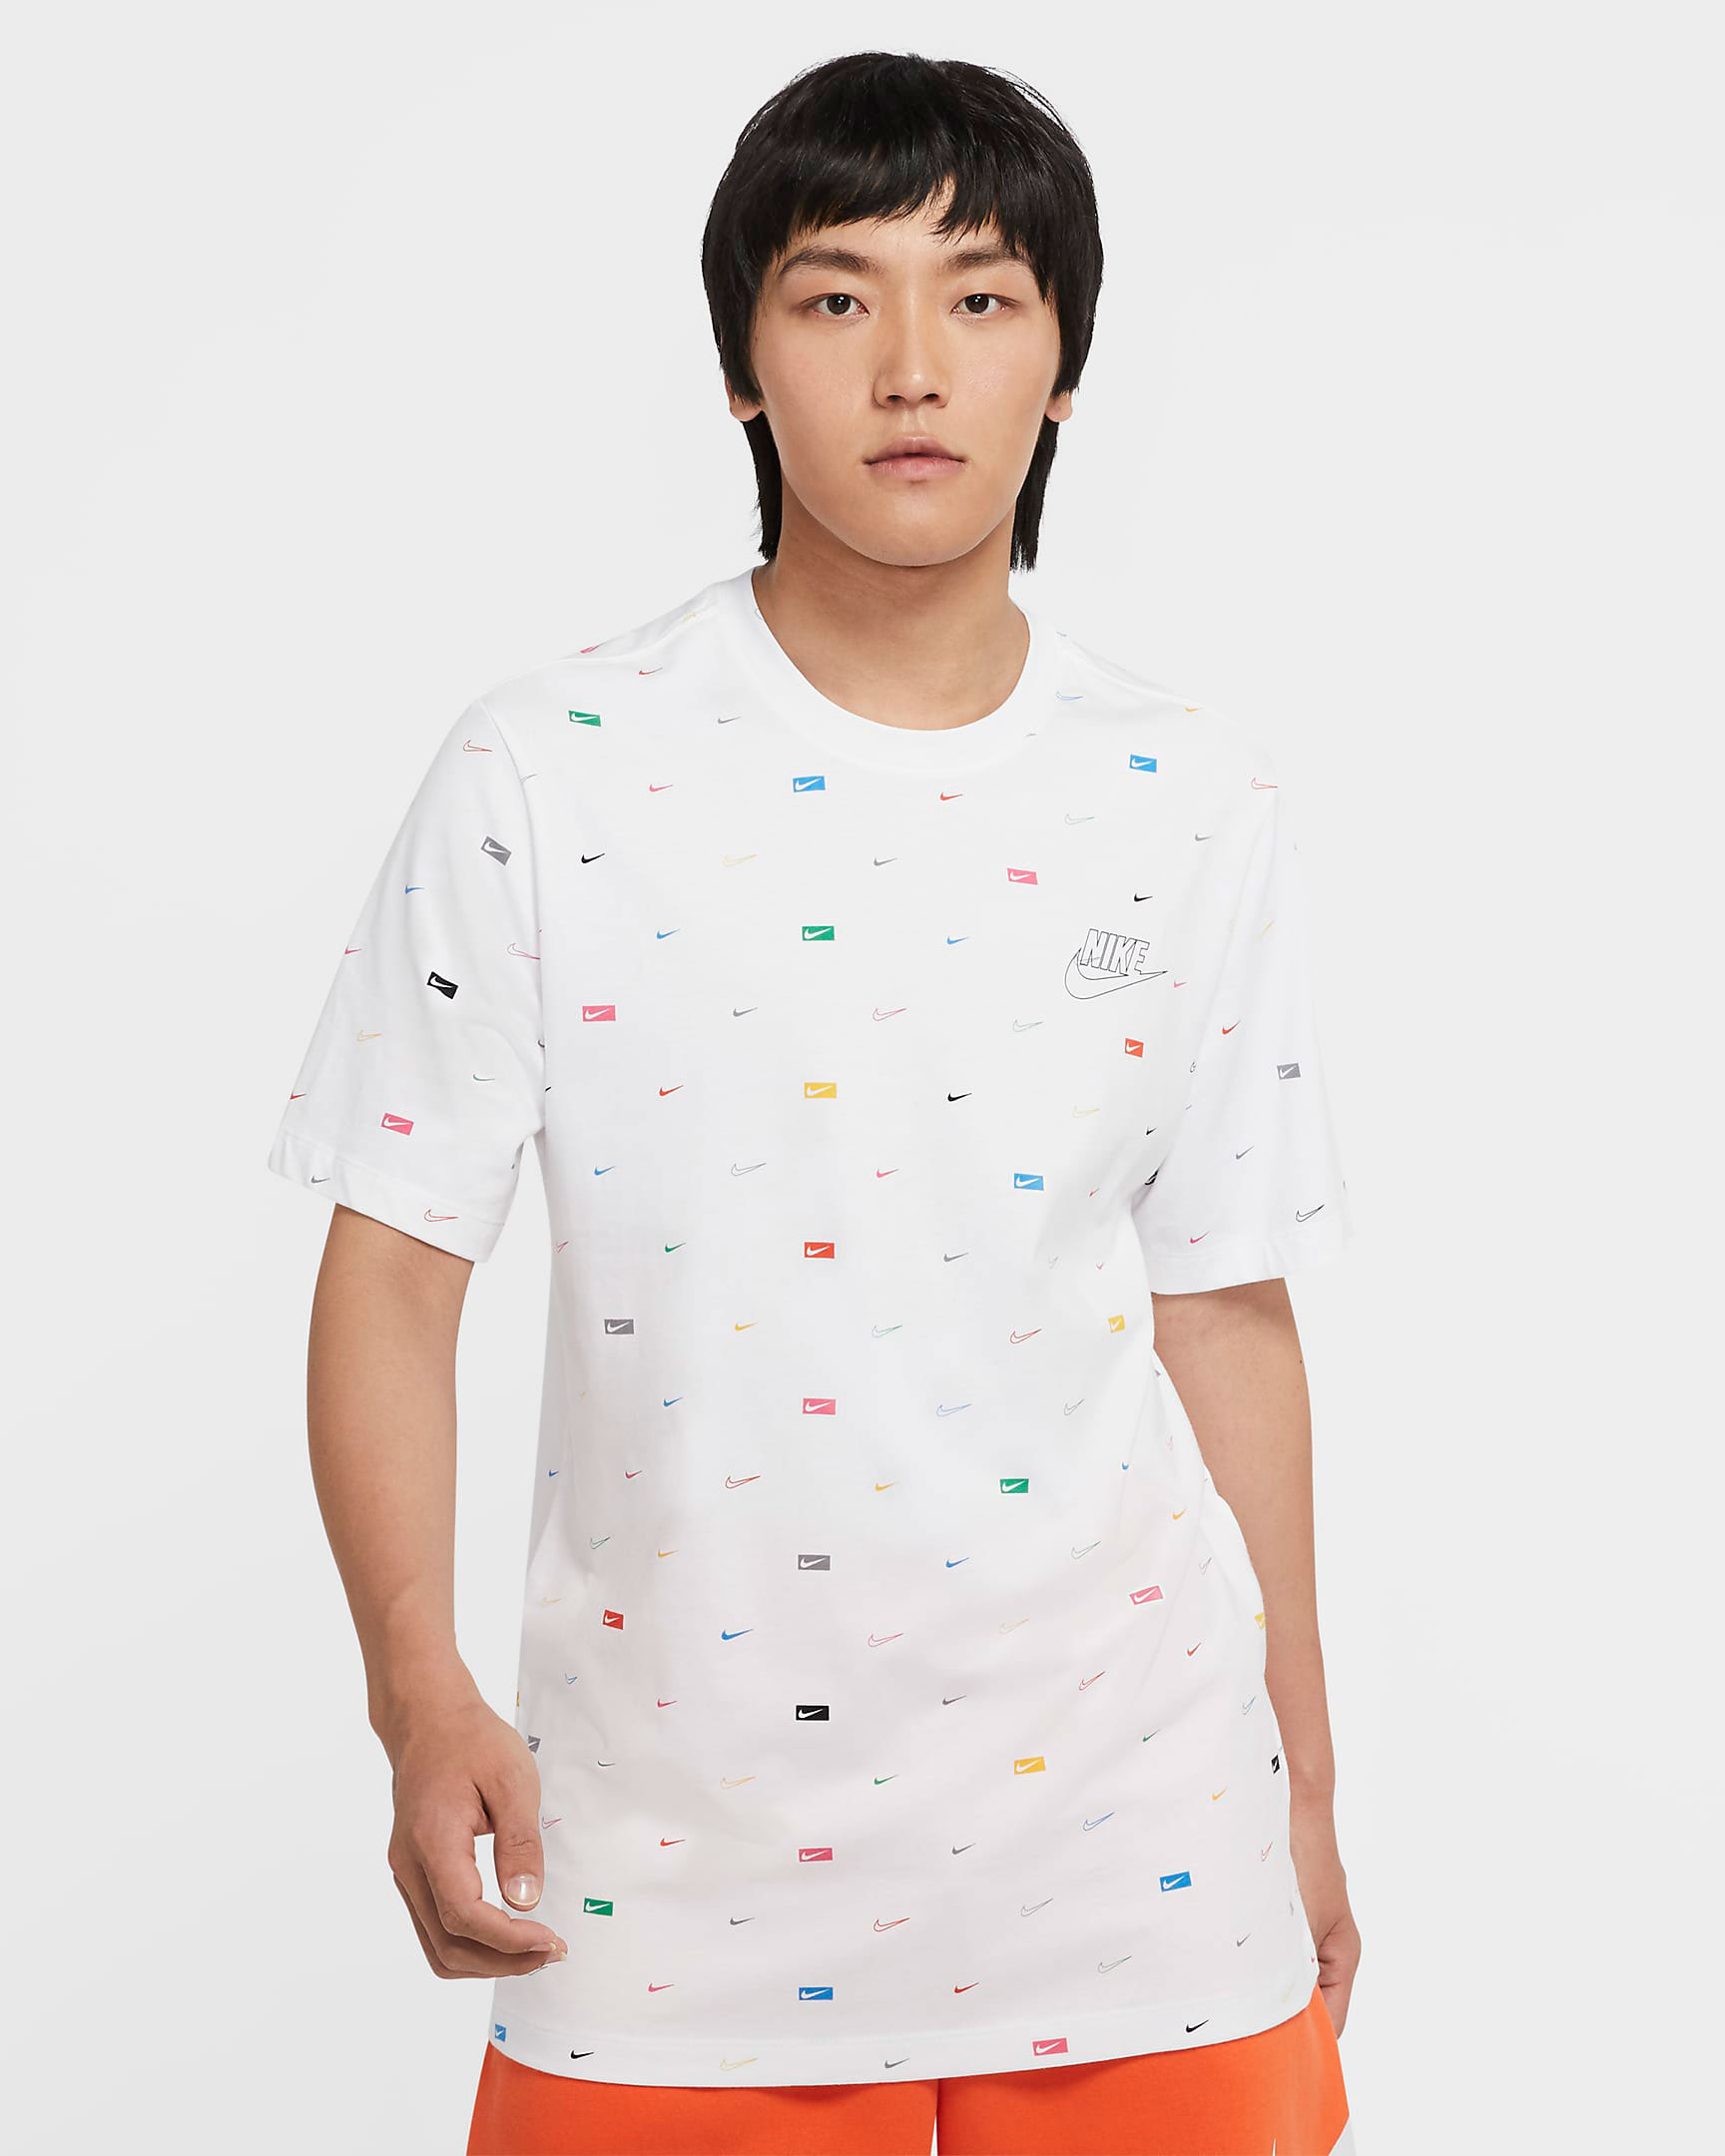 shirts to match vapormax flyknit